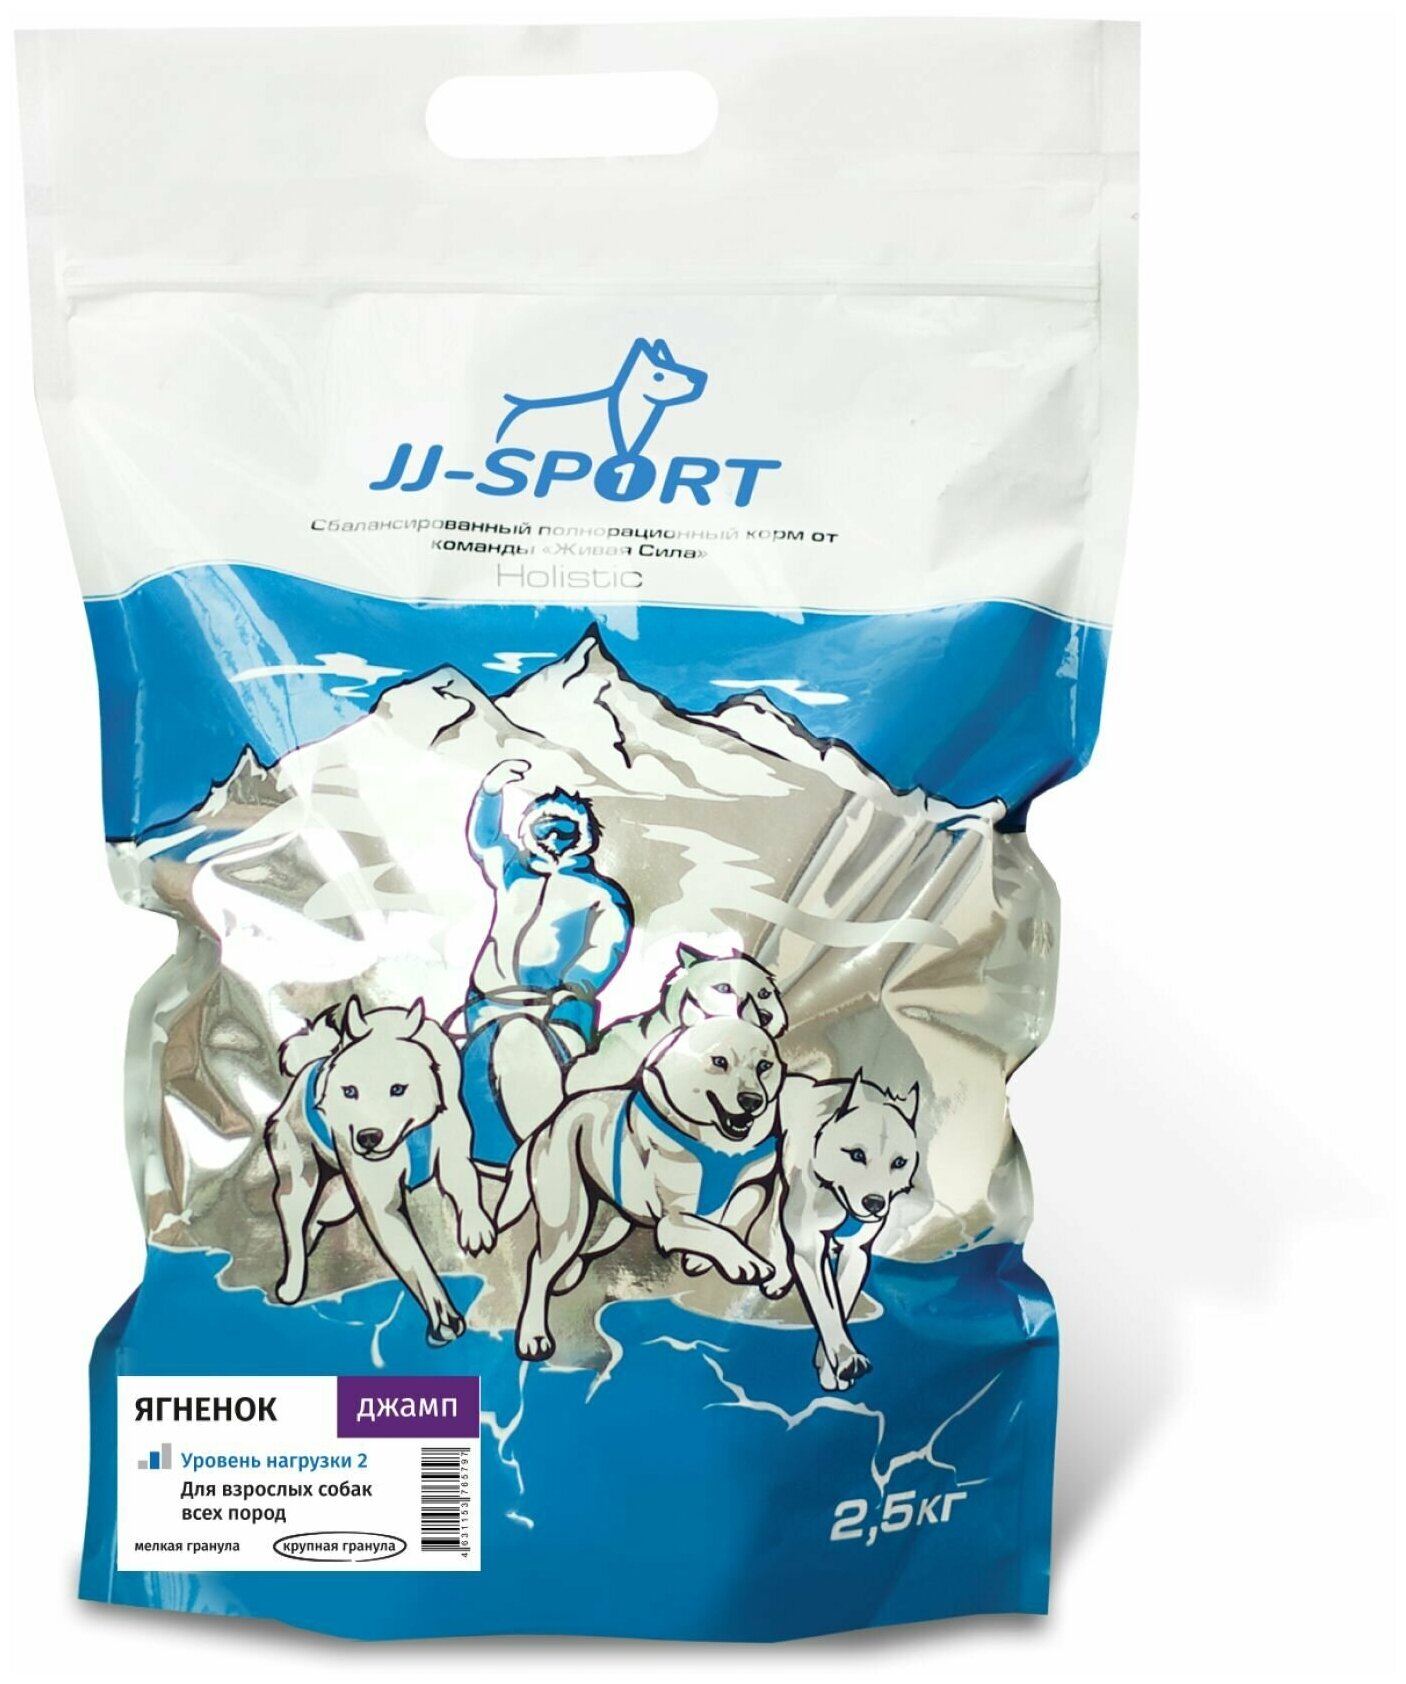 JJ-SPORT Сухой корм для собак поддержка суставов "Джамп" с ягненком, 2,5 кг, крупная гранула